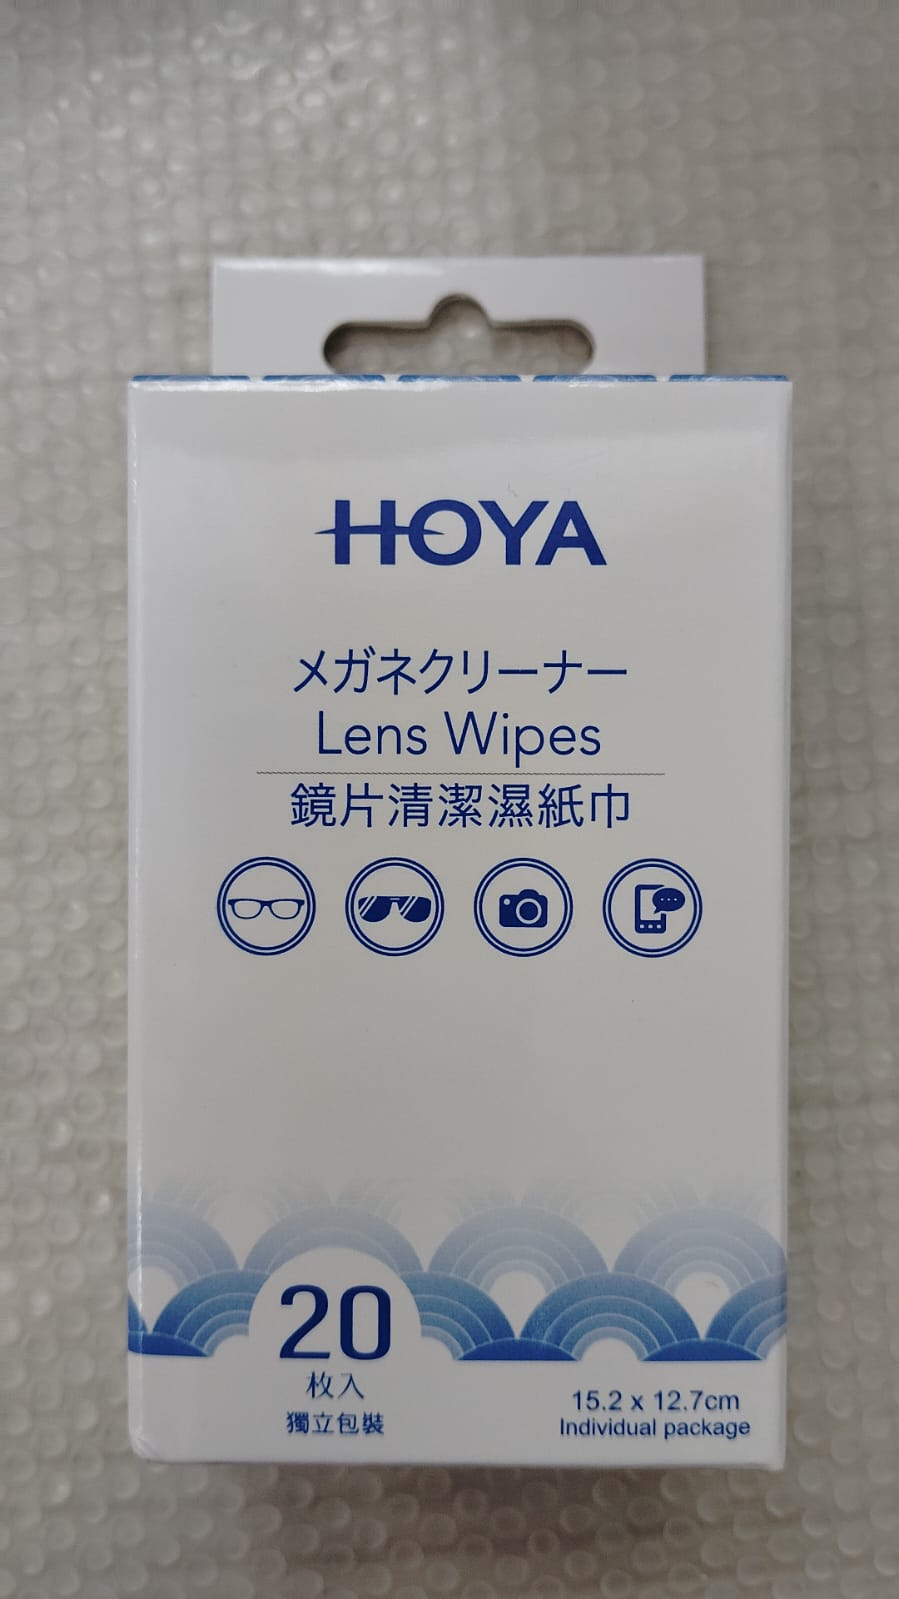 Hoya lens wipes